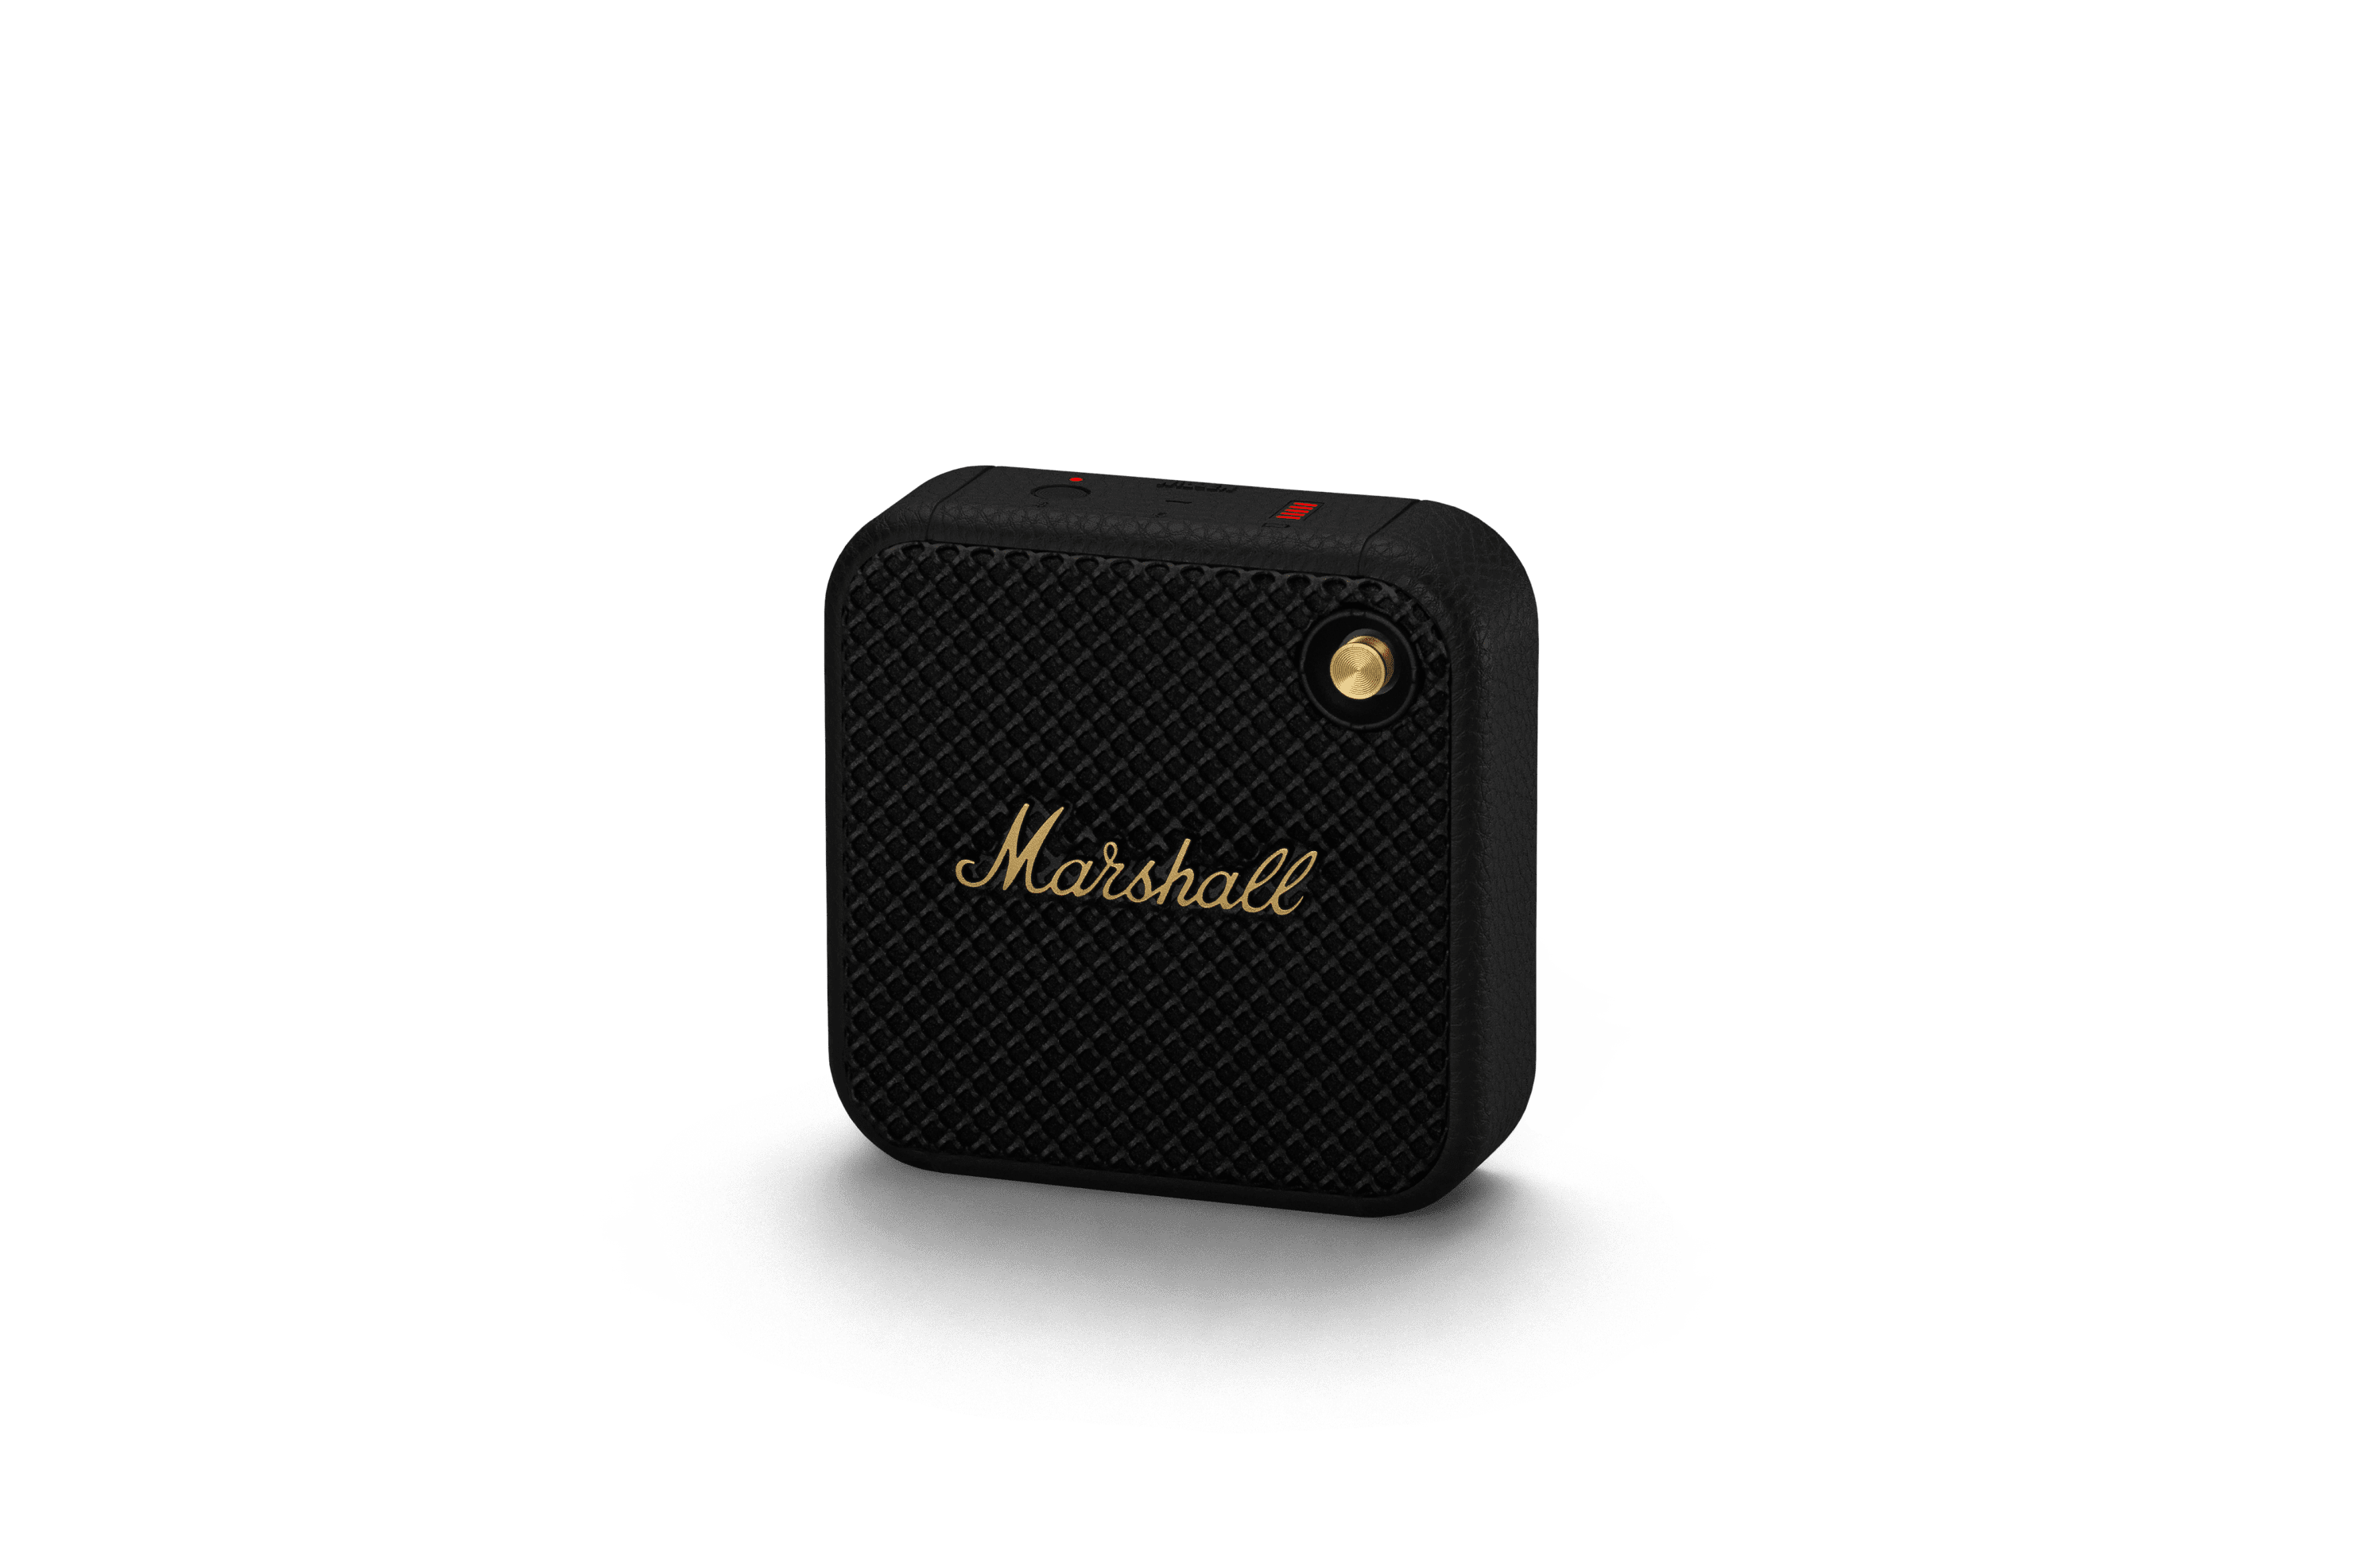 Portable Speakers - Wireless, Bluetooth Speakers